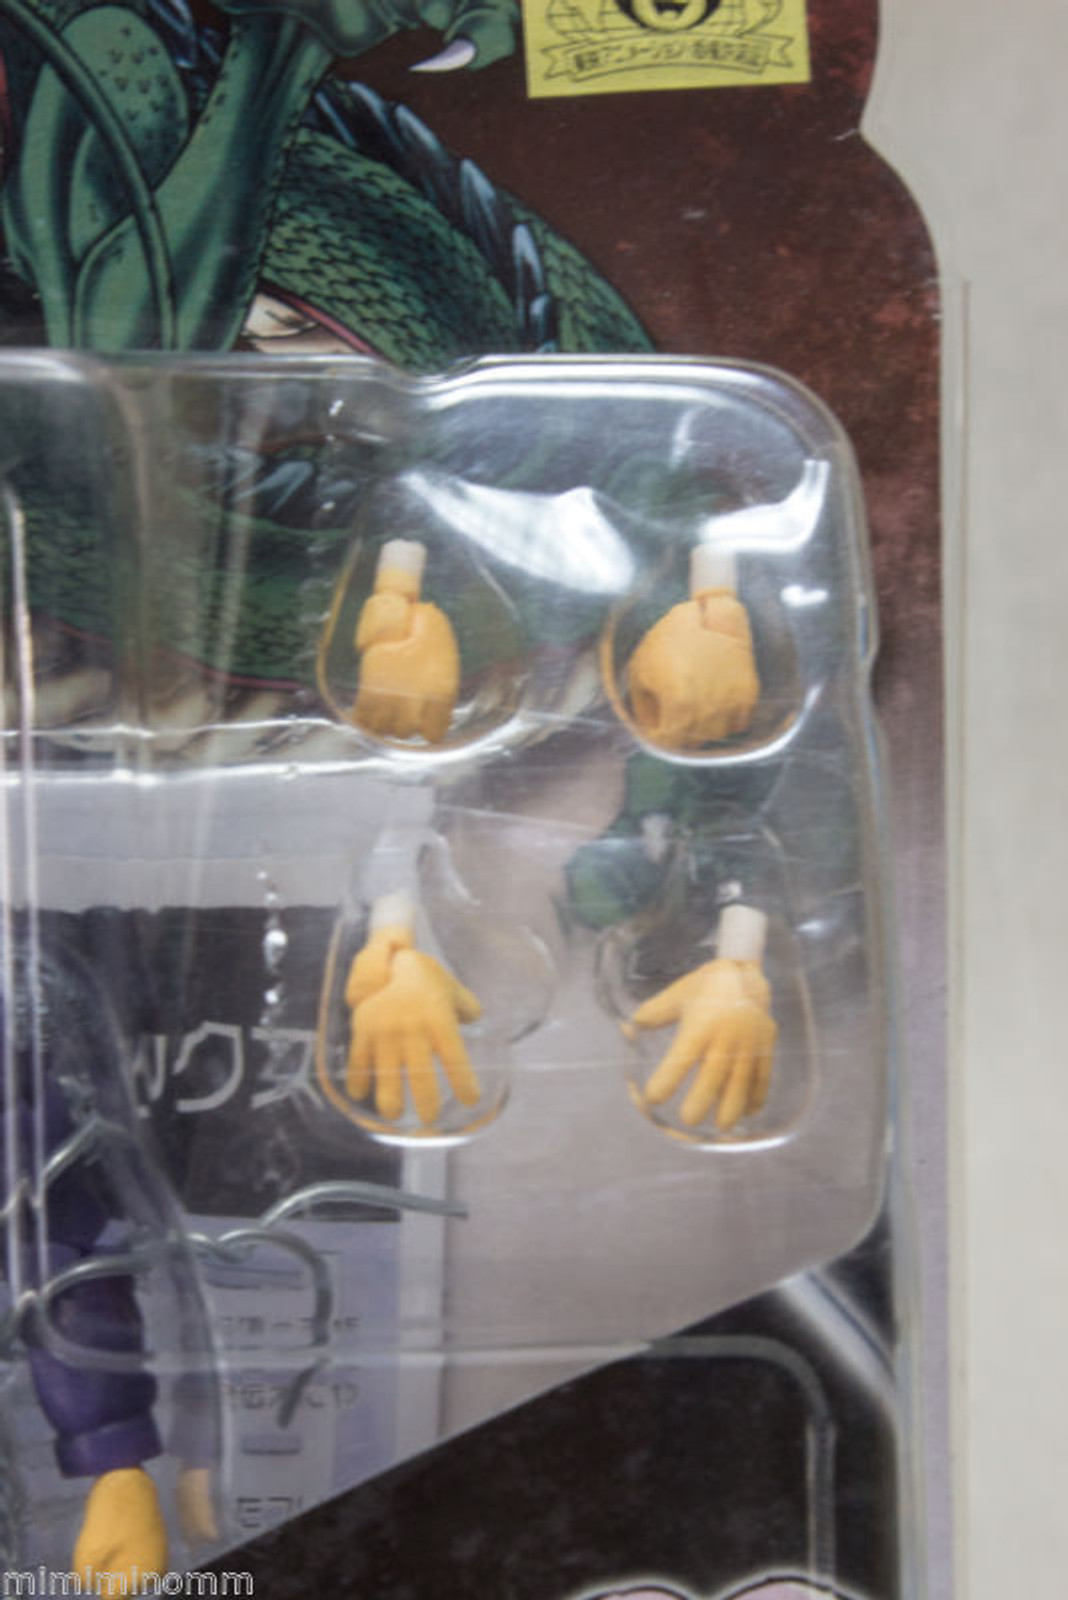 Beautiful SSJ Trunks in Saiyan Armor Dragon Ball Z Megahouse Jp Figure Mint  Cond